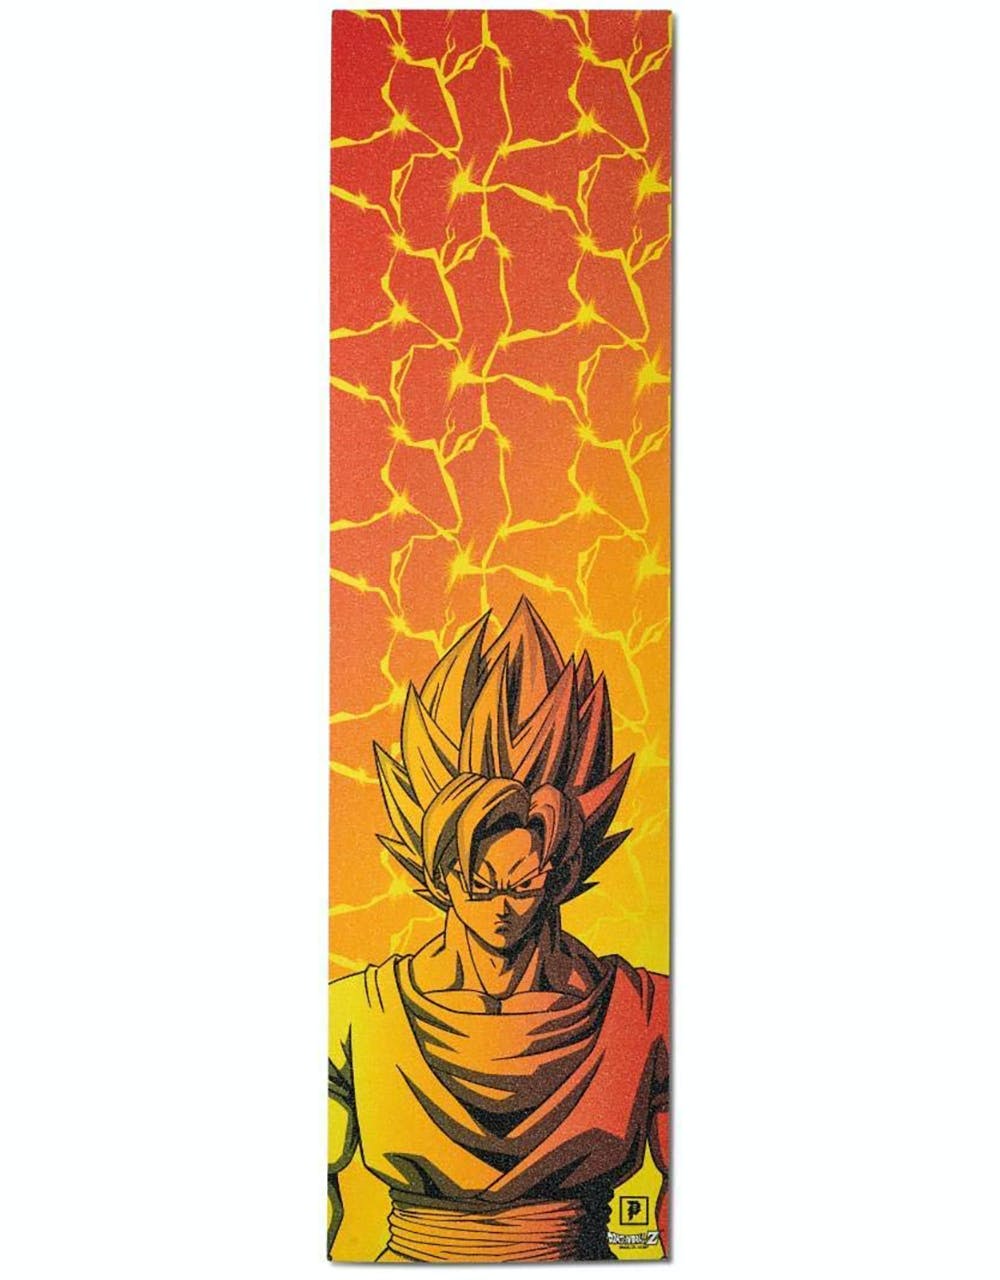 Primitive x Dragon Ball Z Goku Grip Tape Sheet